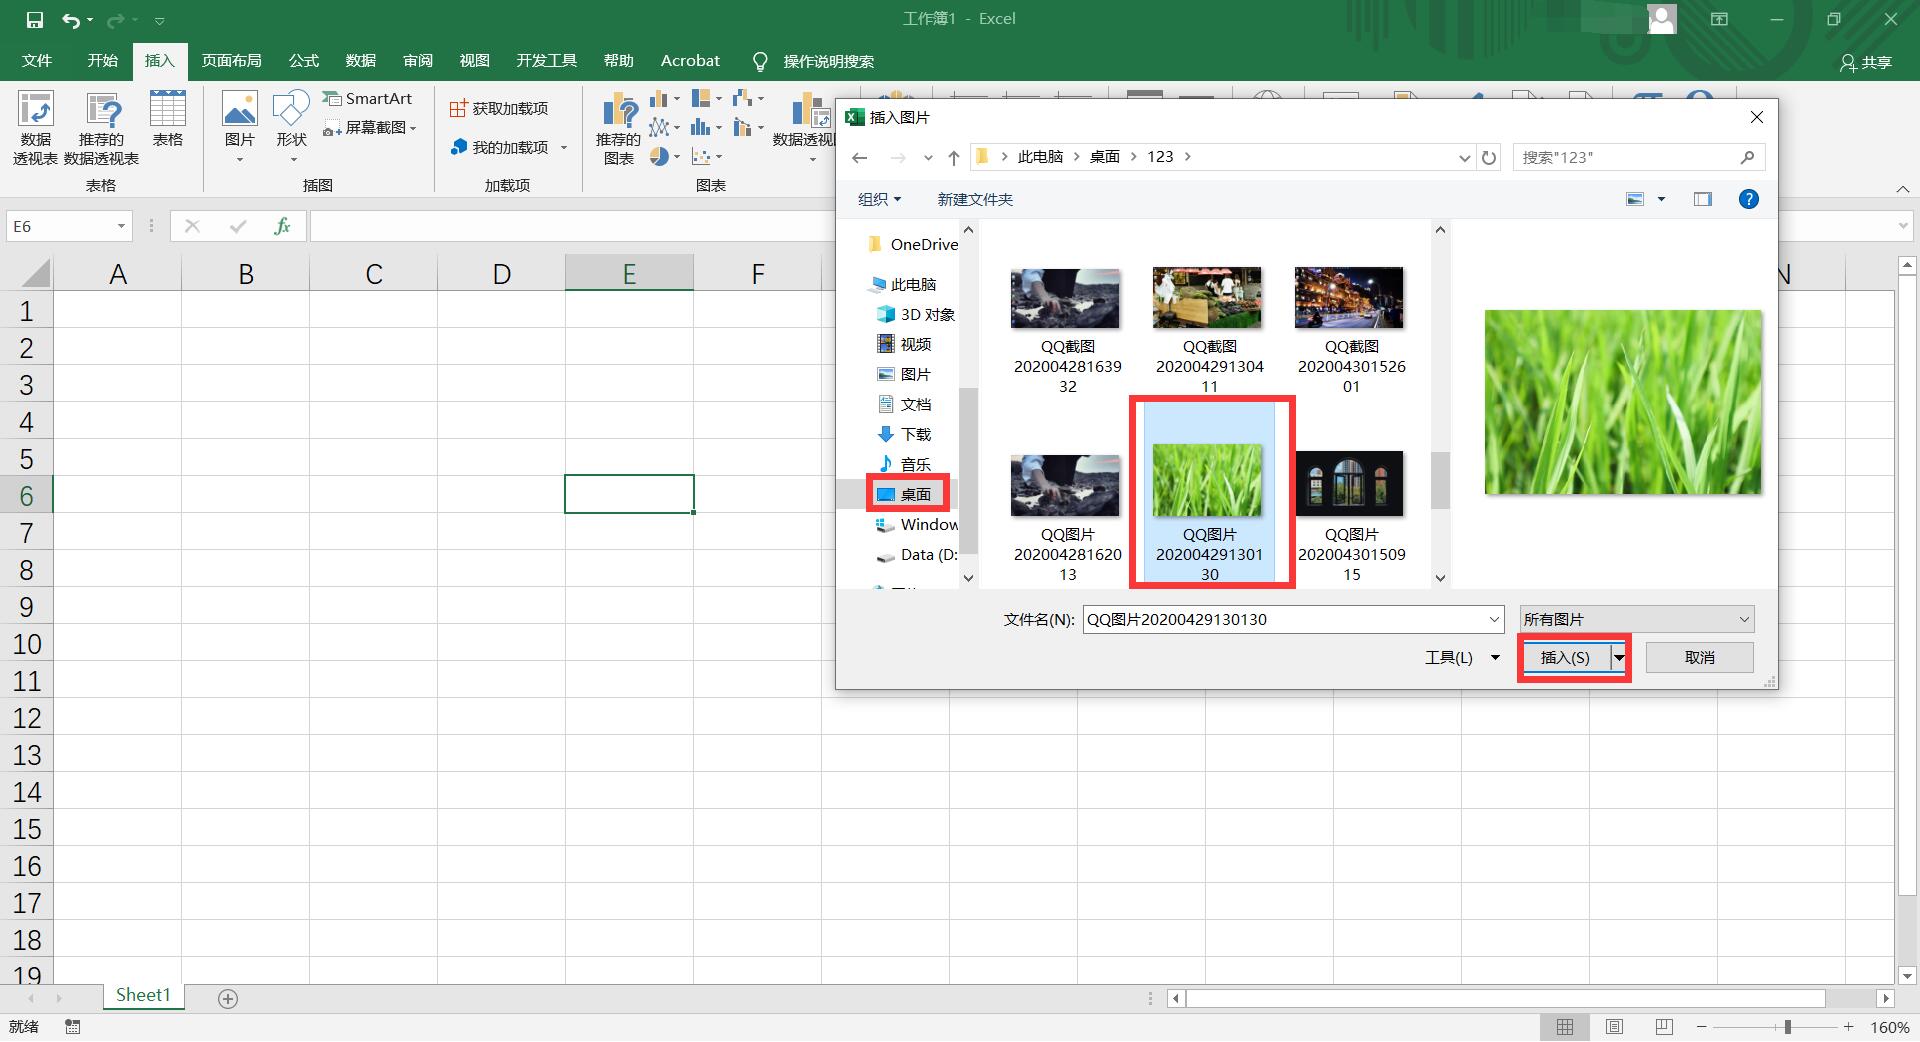 【Excel圖片】如何在Excel插入、鎖定圖片 3個EXCEL基本操作教學 - 今日訊息